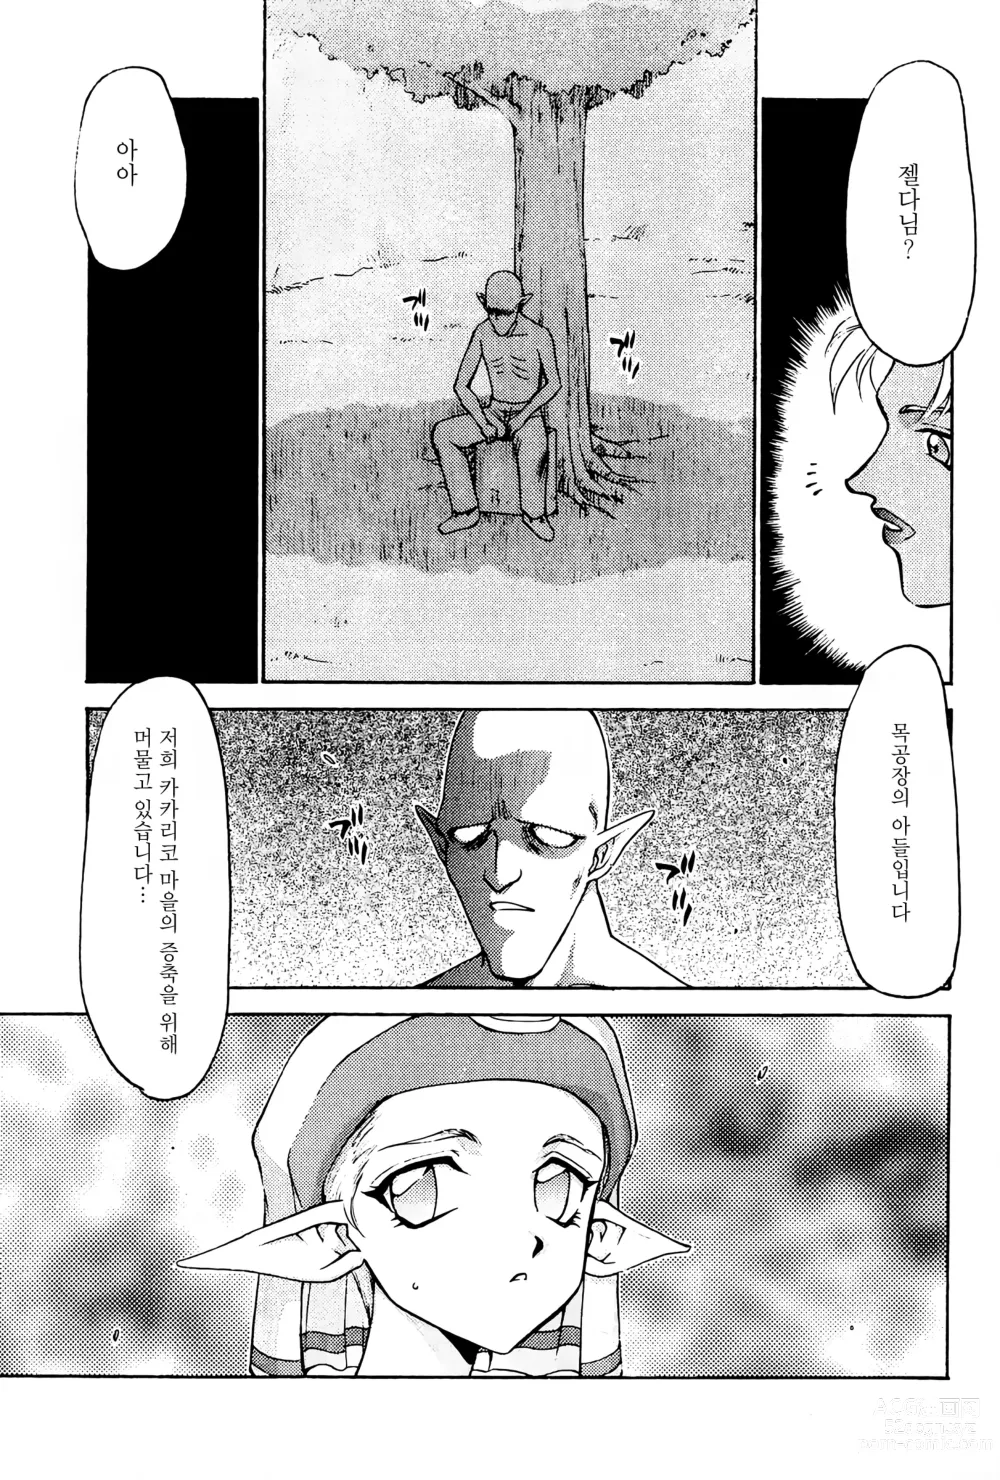 Page 6 of doujinshi NISE Zelda no Densetsu Prologue